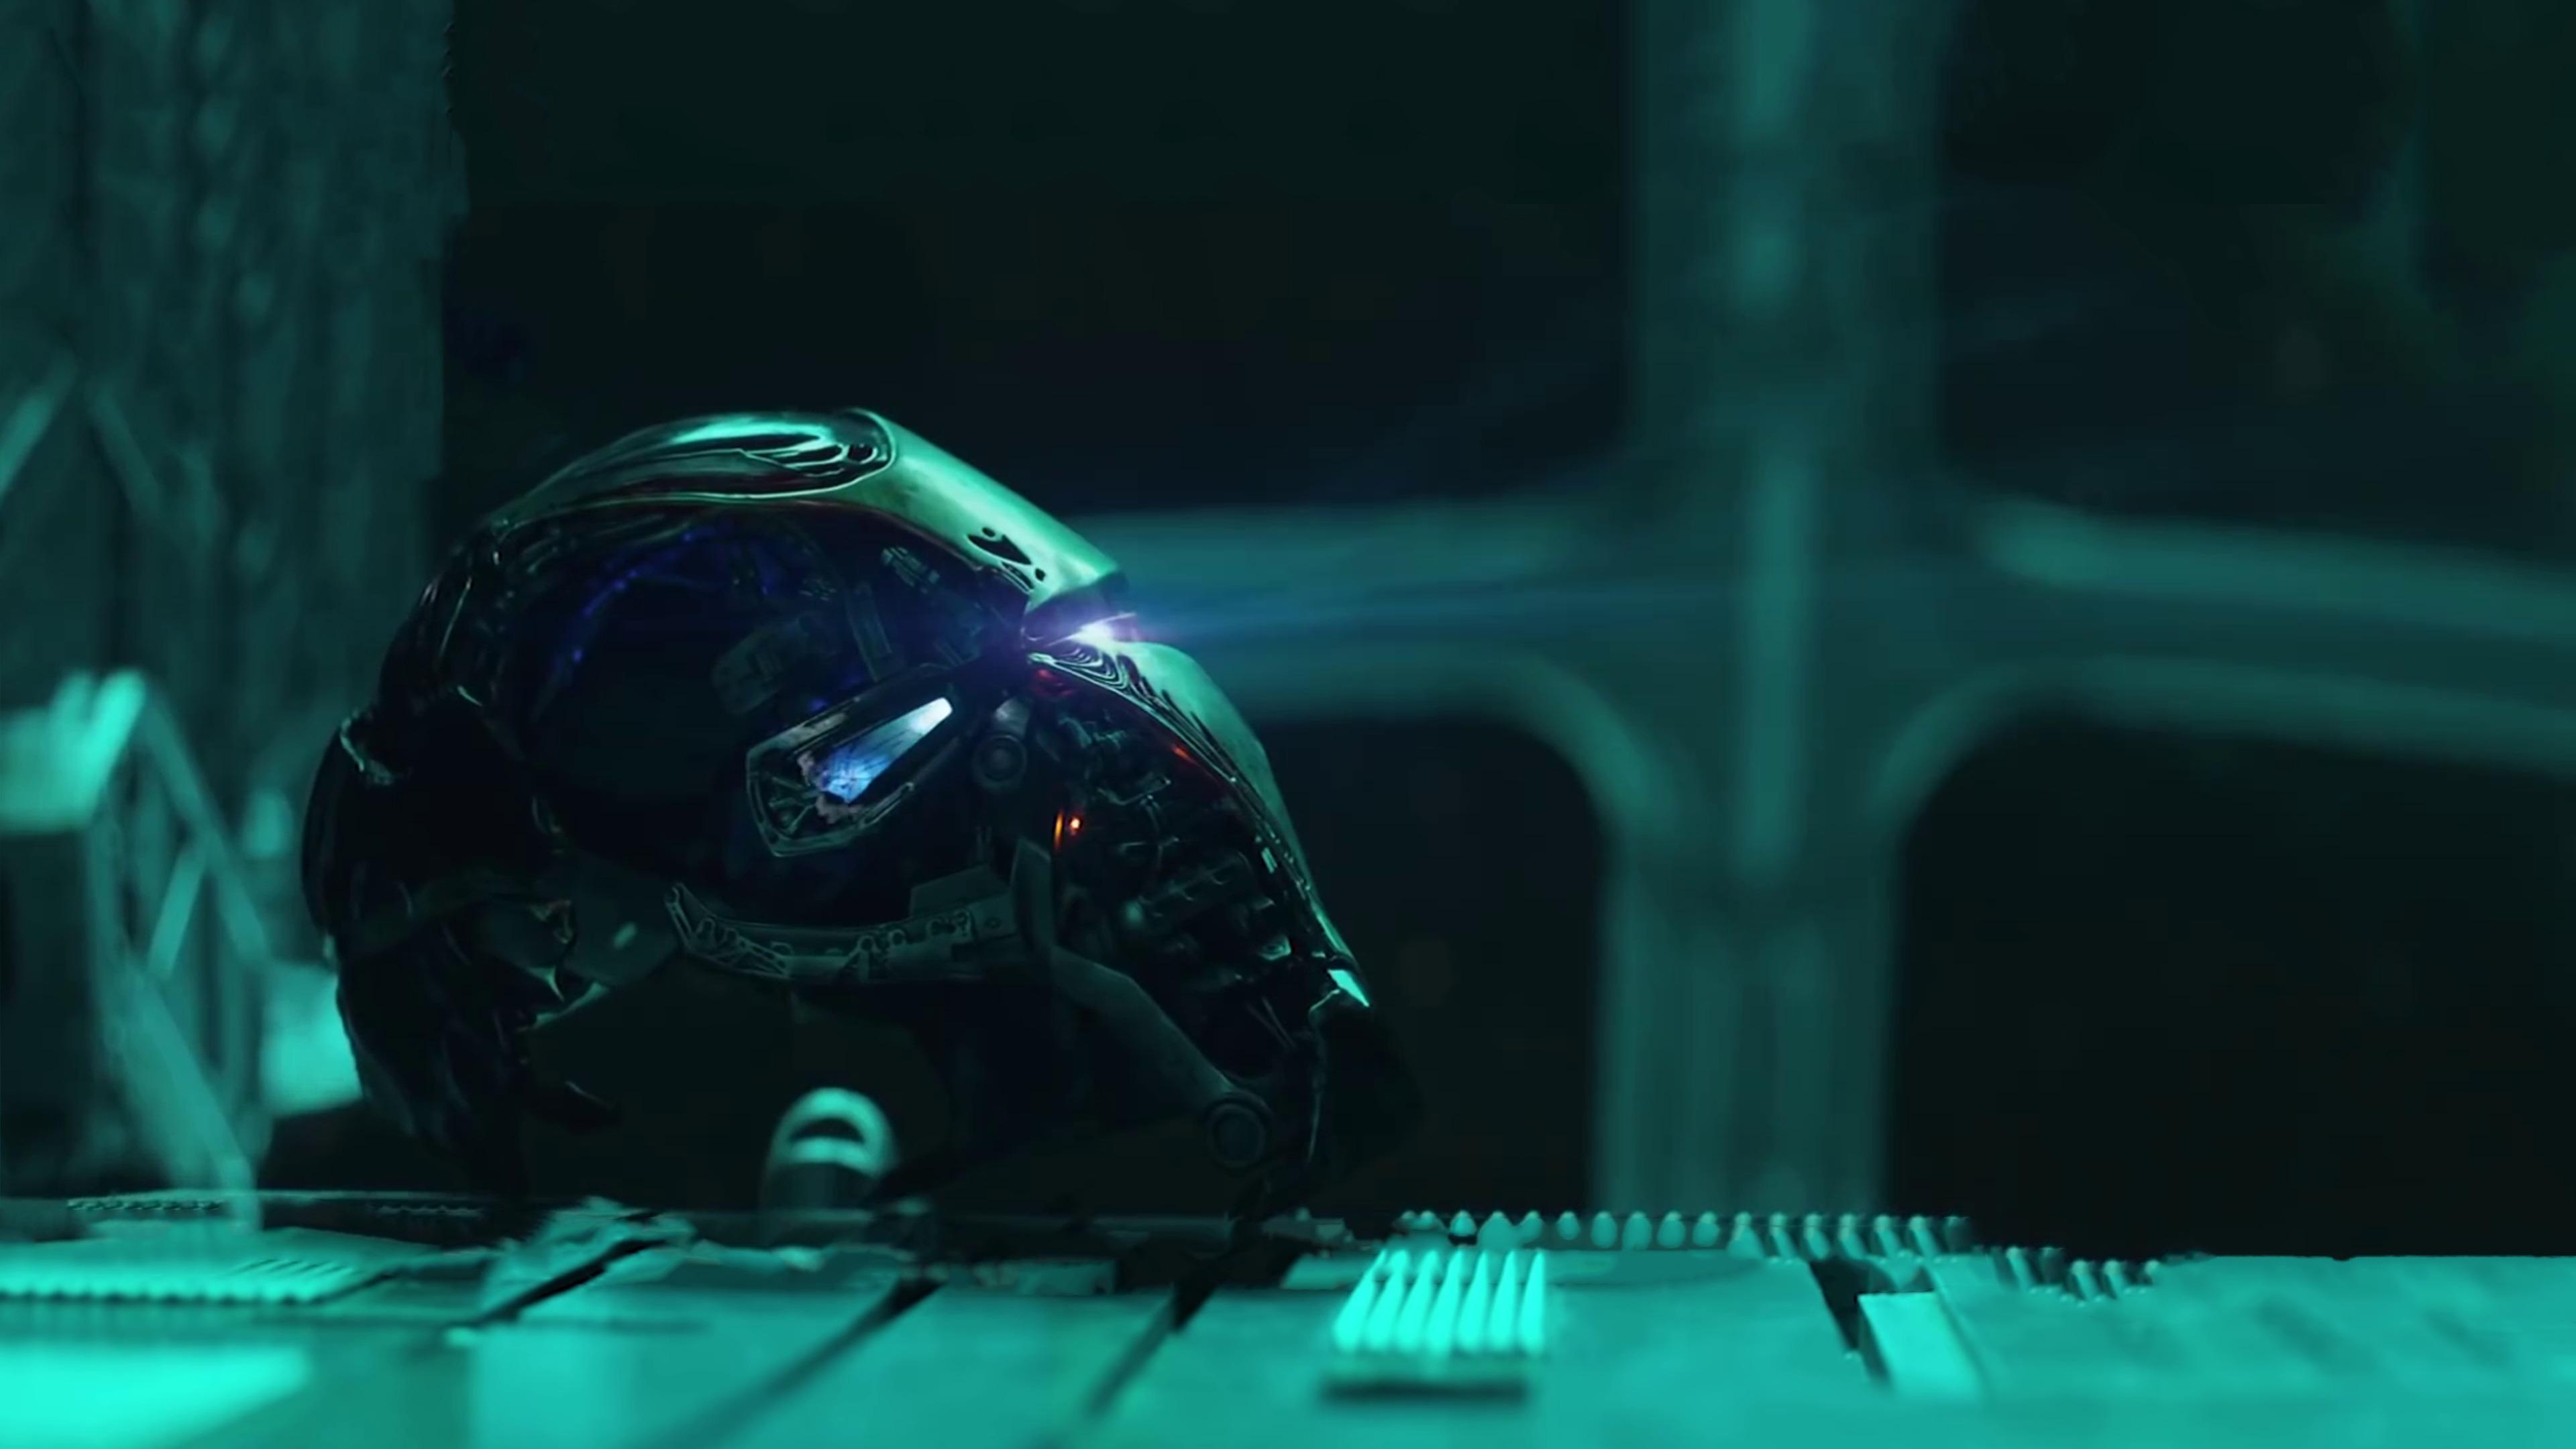 Iron Man Helmet From Avengers Endgame Wallpaper, HD Movies 4K